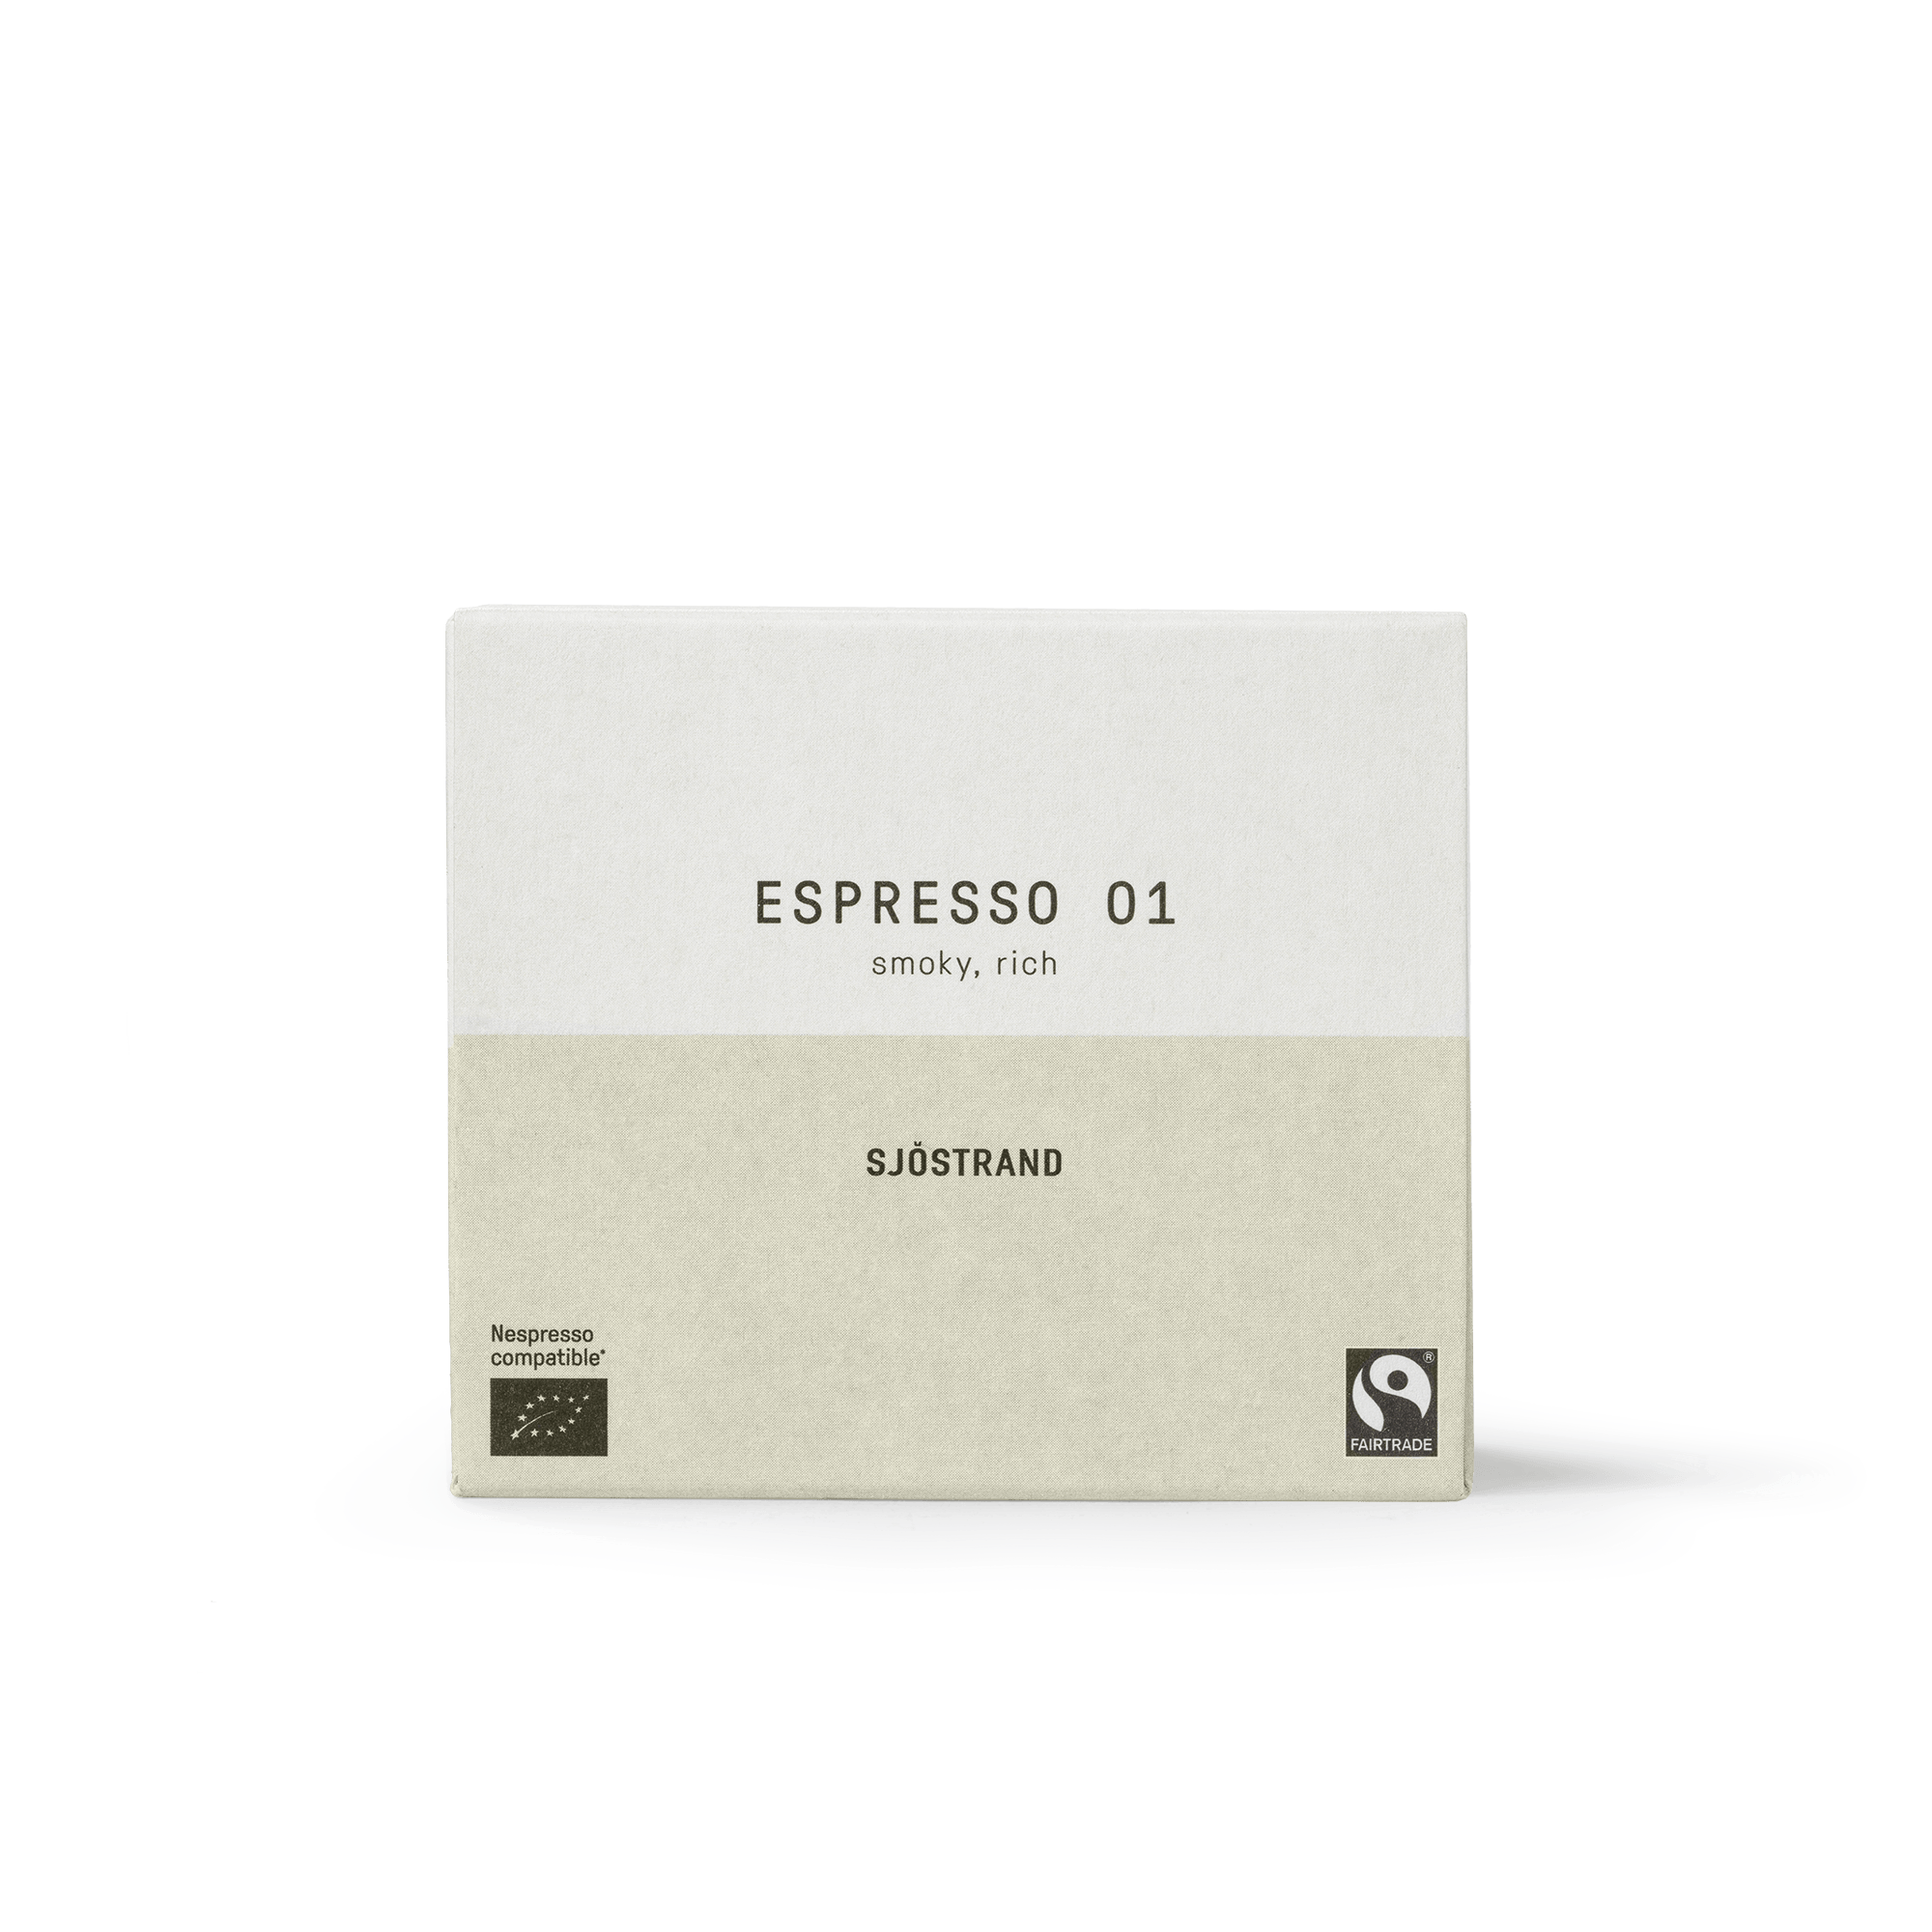 Espresso 01 image